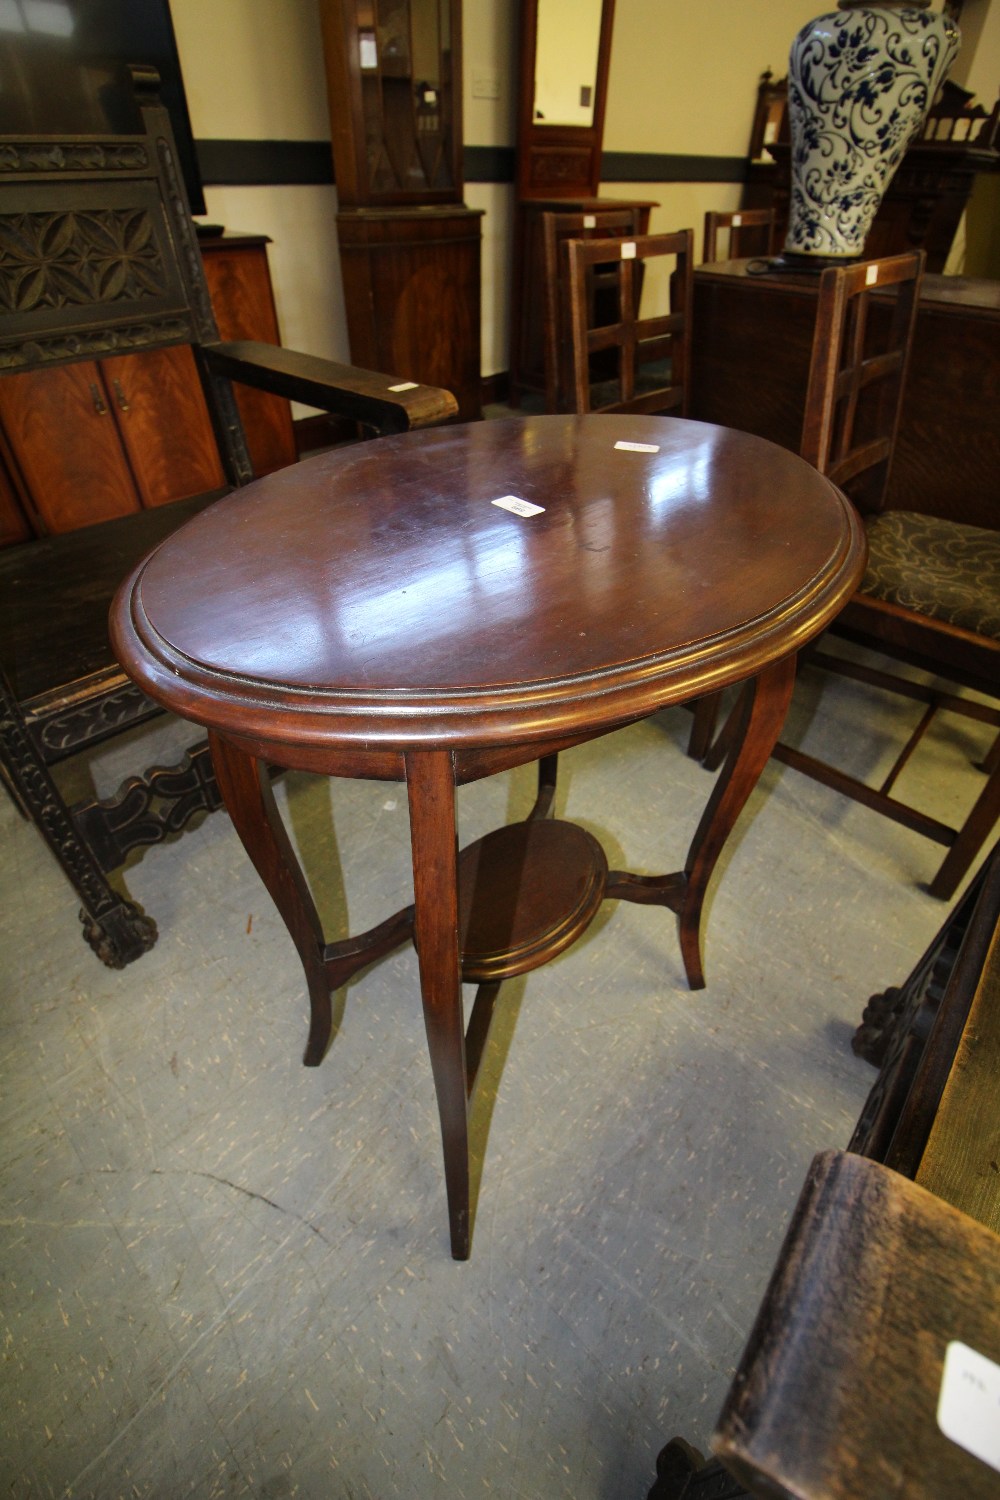 Edwardian Mahogany Occasional Table